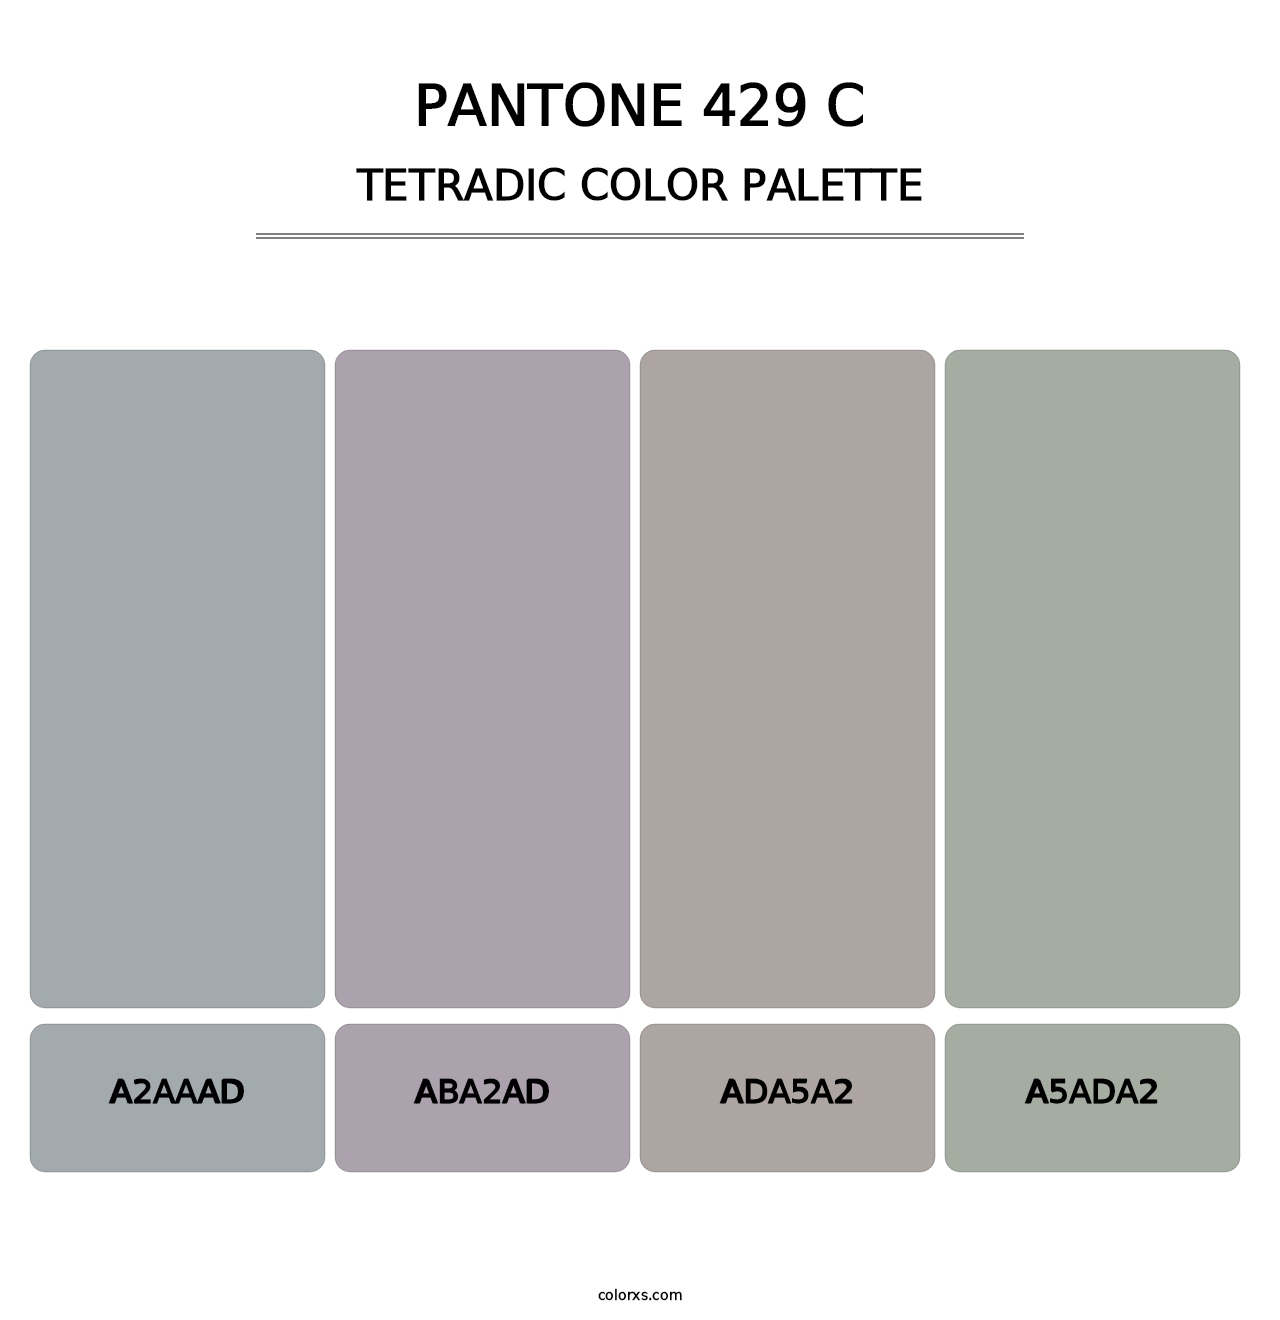 PANTONE 429 C - Tetradic Color Palette